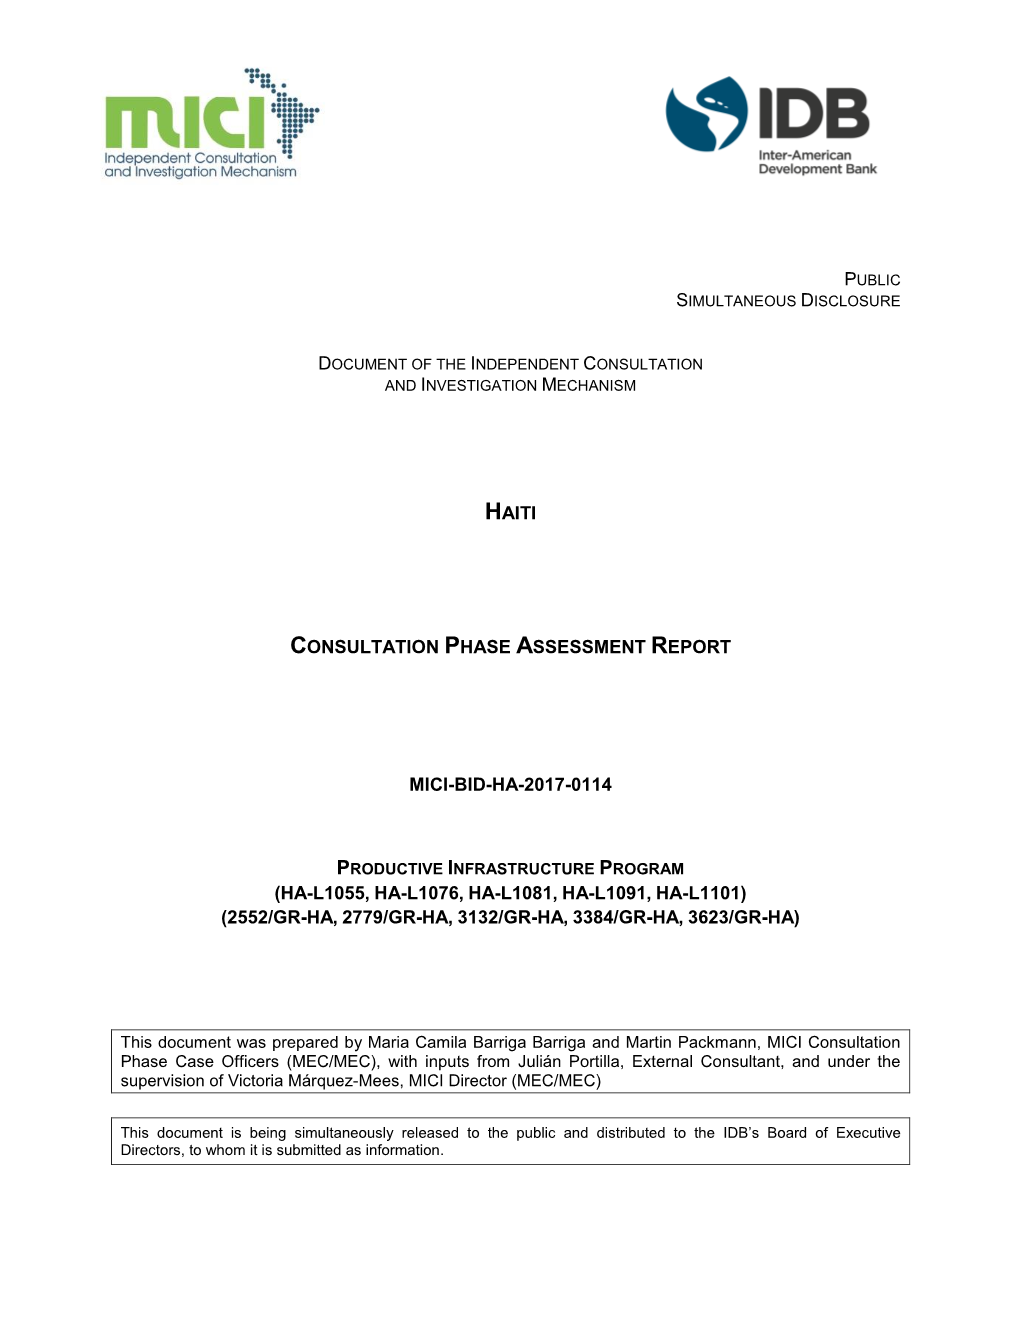 Haiti Consultation Phase Assessment Report Mici-Bid